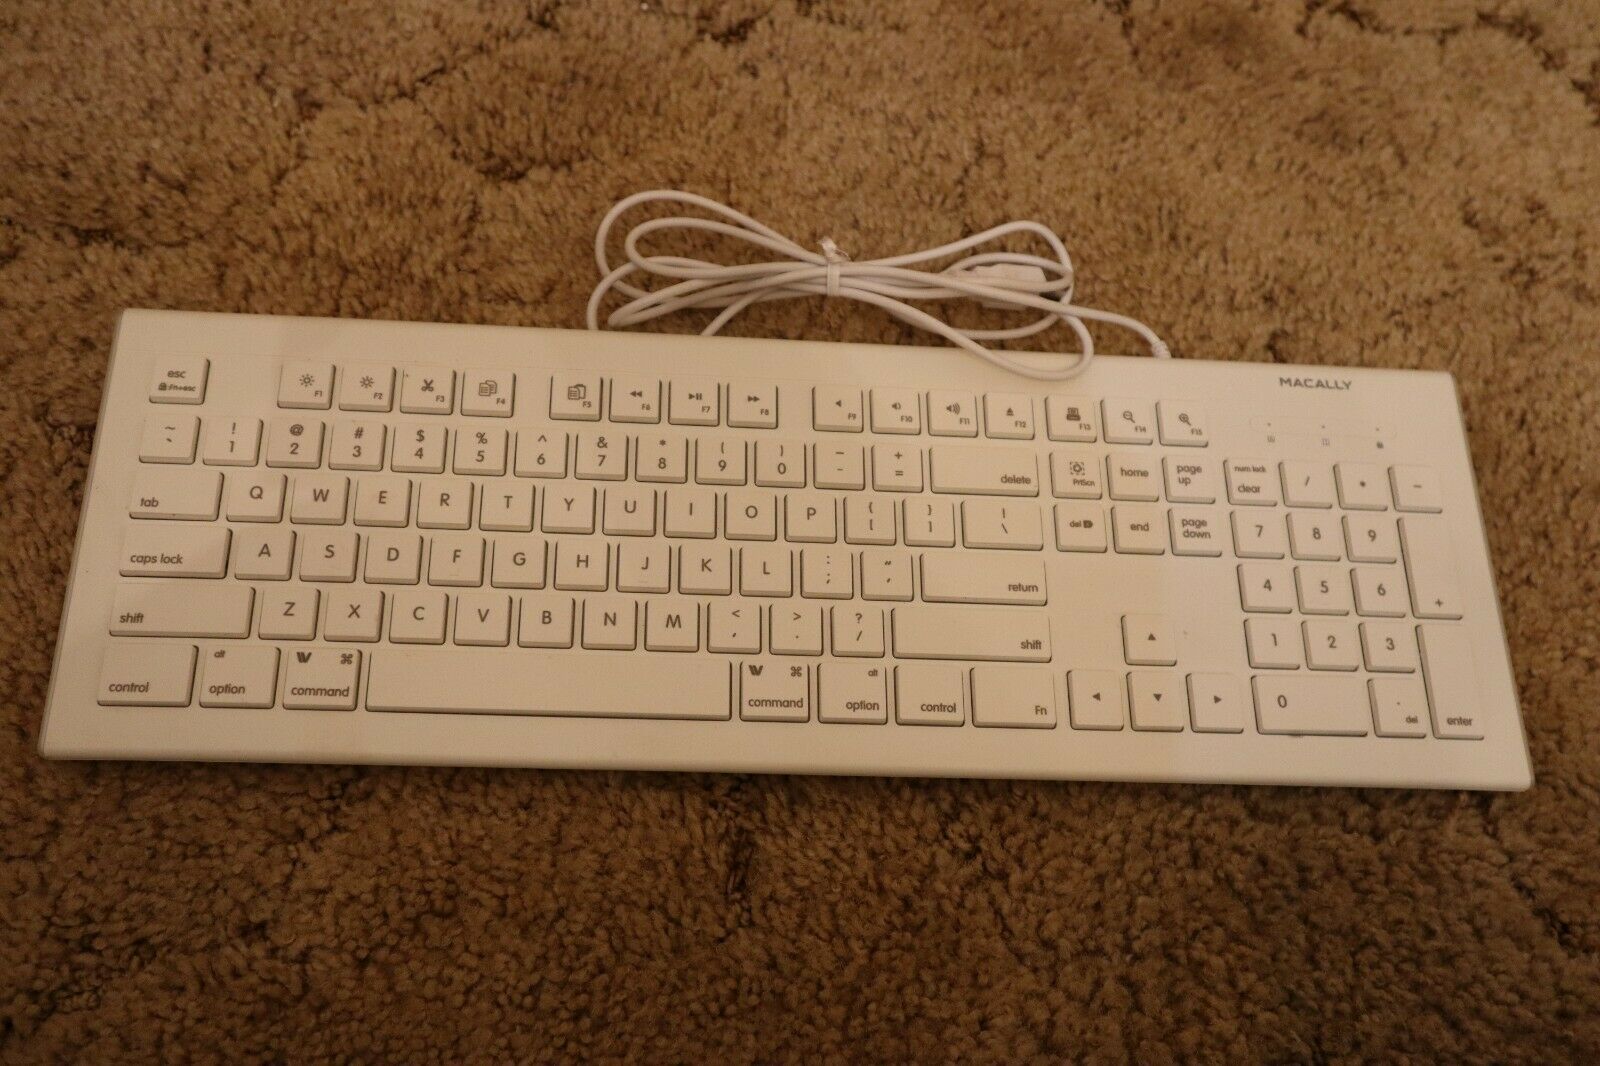 Macally KKEYE USB Wired Standard Keyboard - $19.75